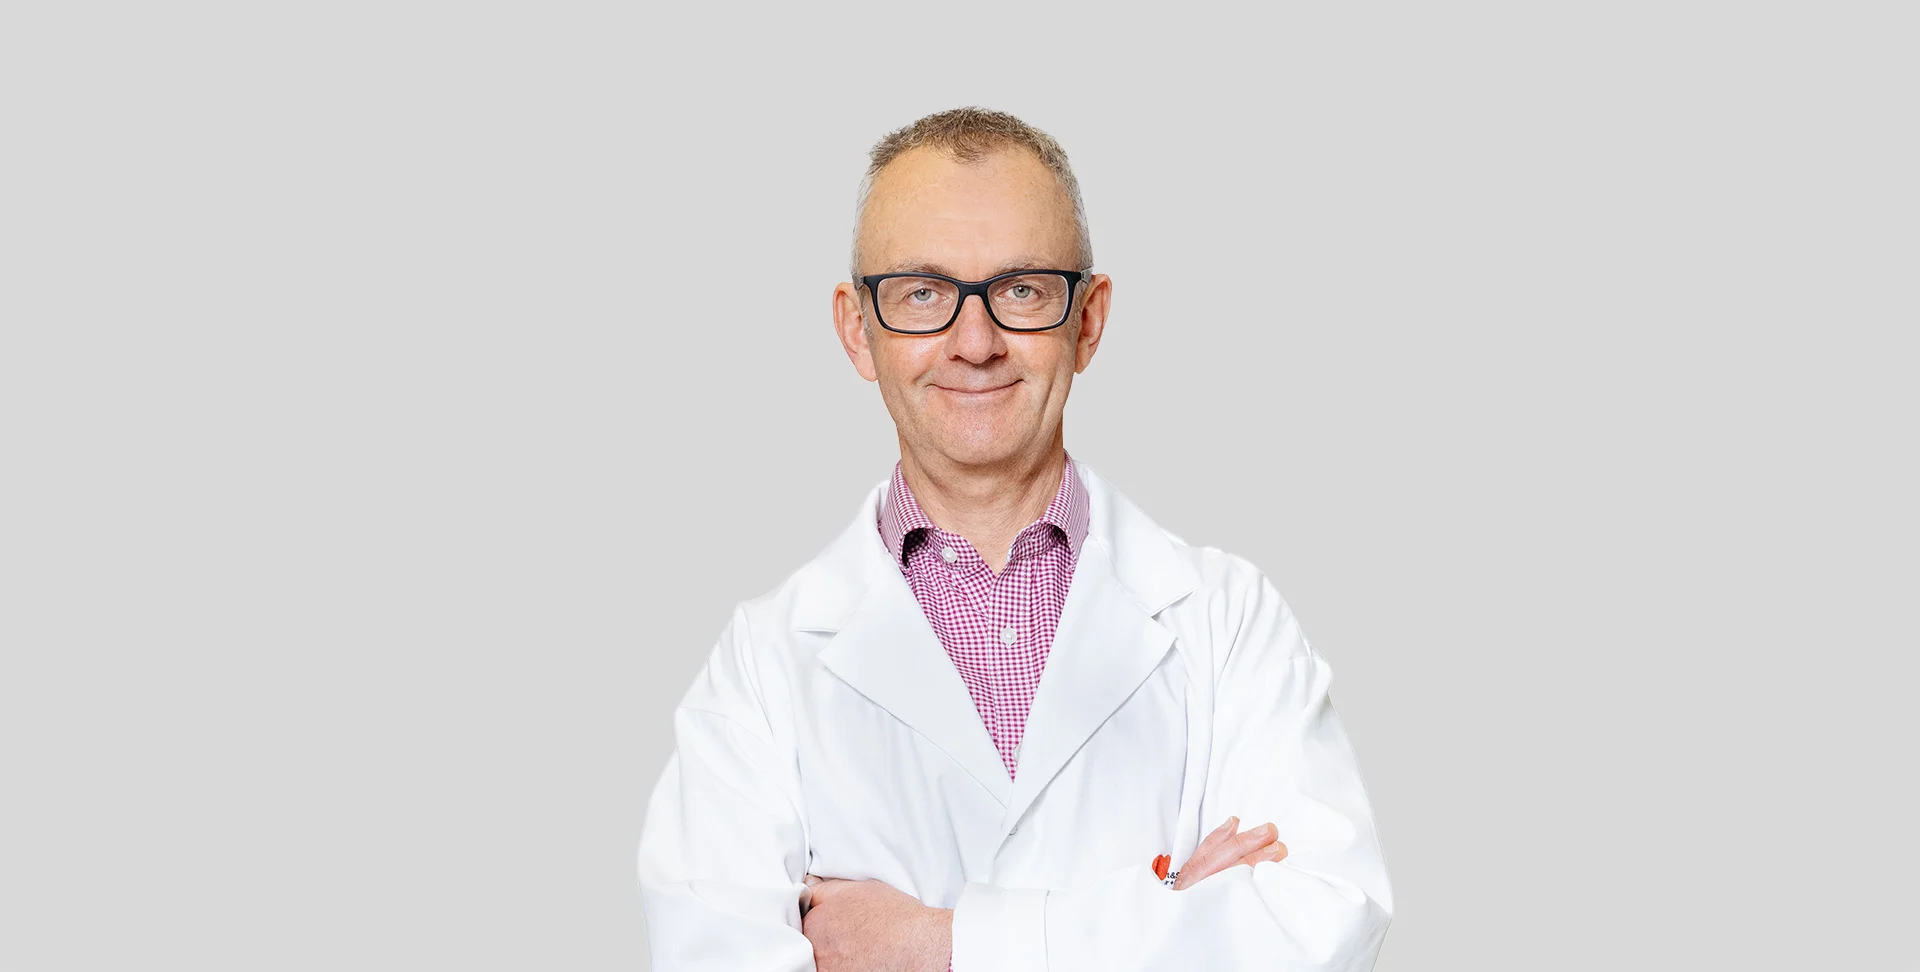 Heart & Stroke researcher Dr. Philip Barber